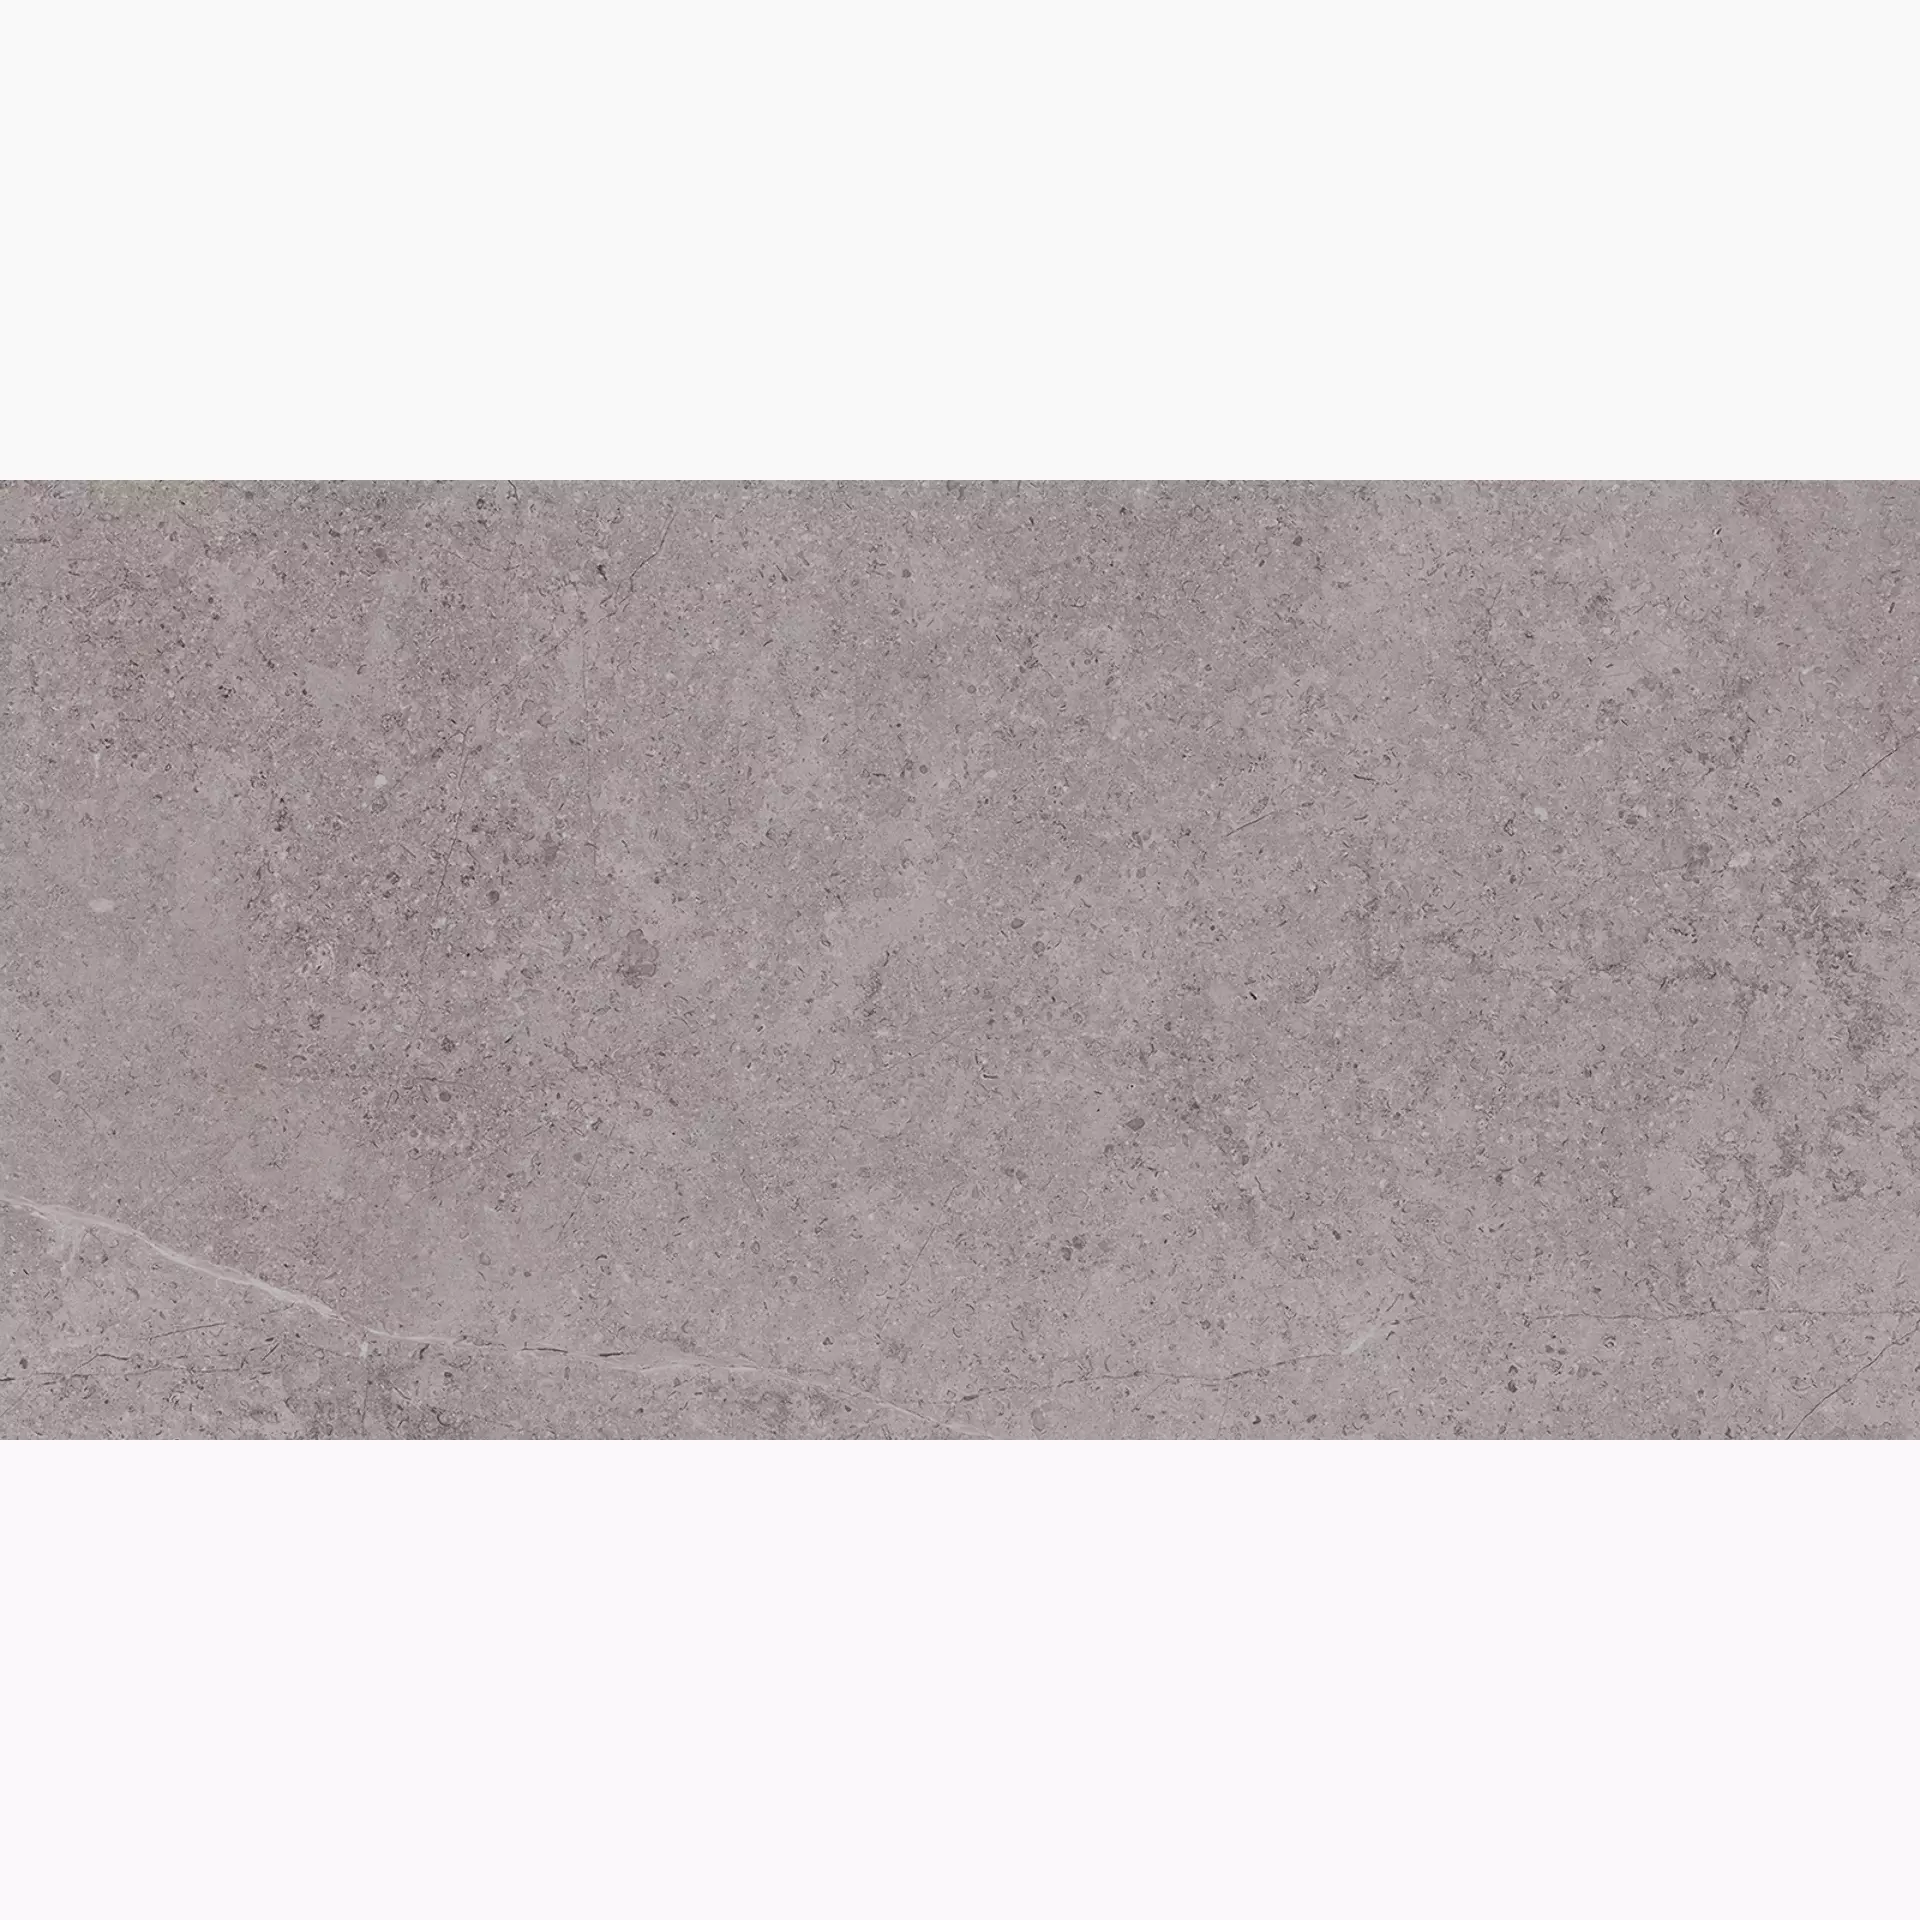 La Faenza Gea Grey Natural Slate Cut Matt 178163 30x60cm rectified 6,5mm - GEA6 36G RM